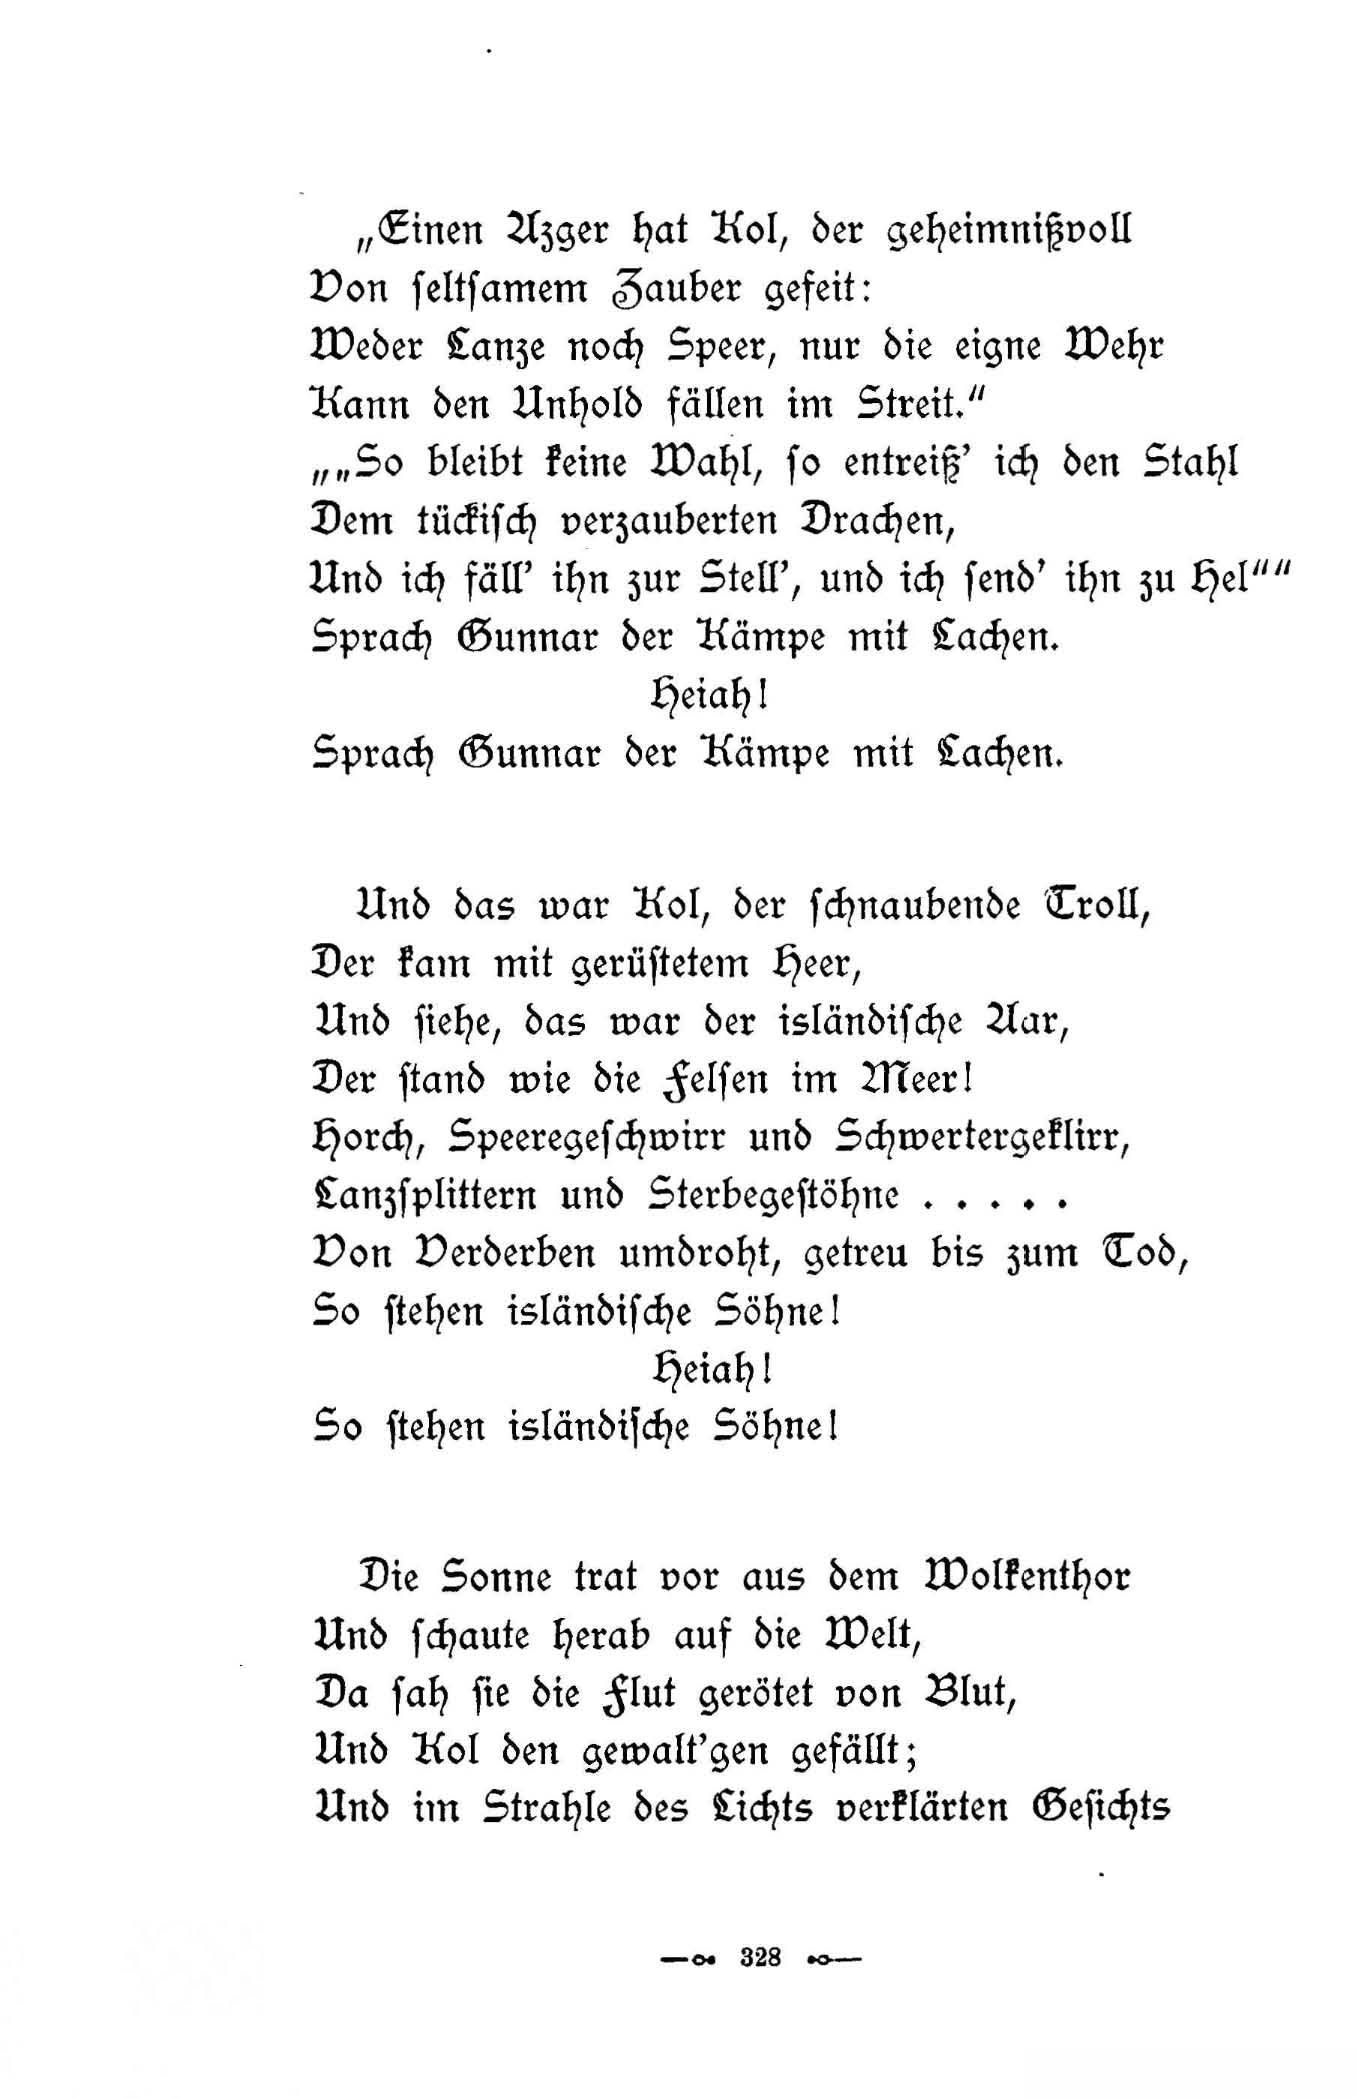 Scarphedin's Skaldensang (1896) | 2. (328) Main body of text